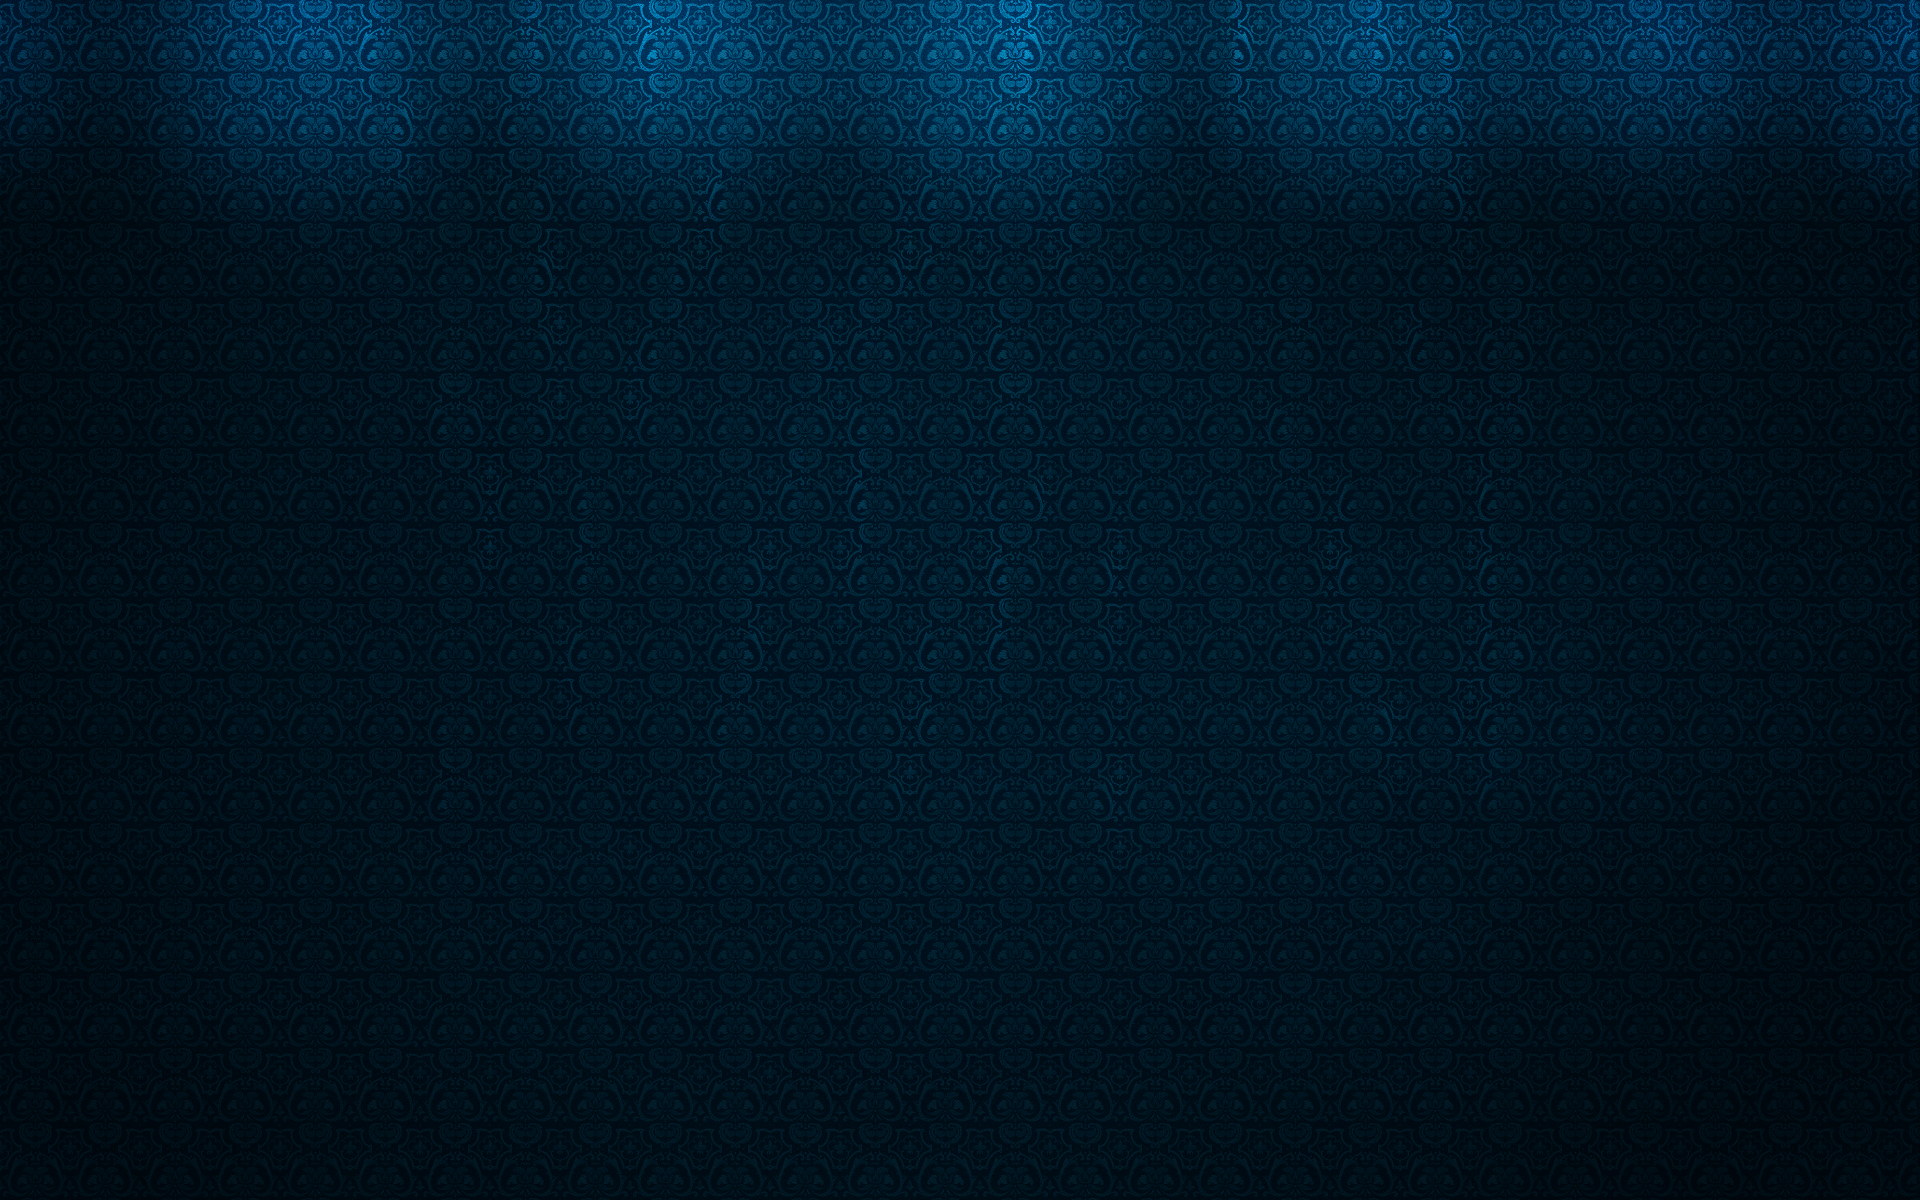 Download Noir Blue Dark Wallpaper 1920x1200 Full HD Wallpapers